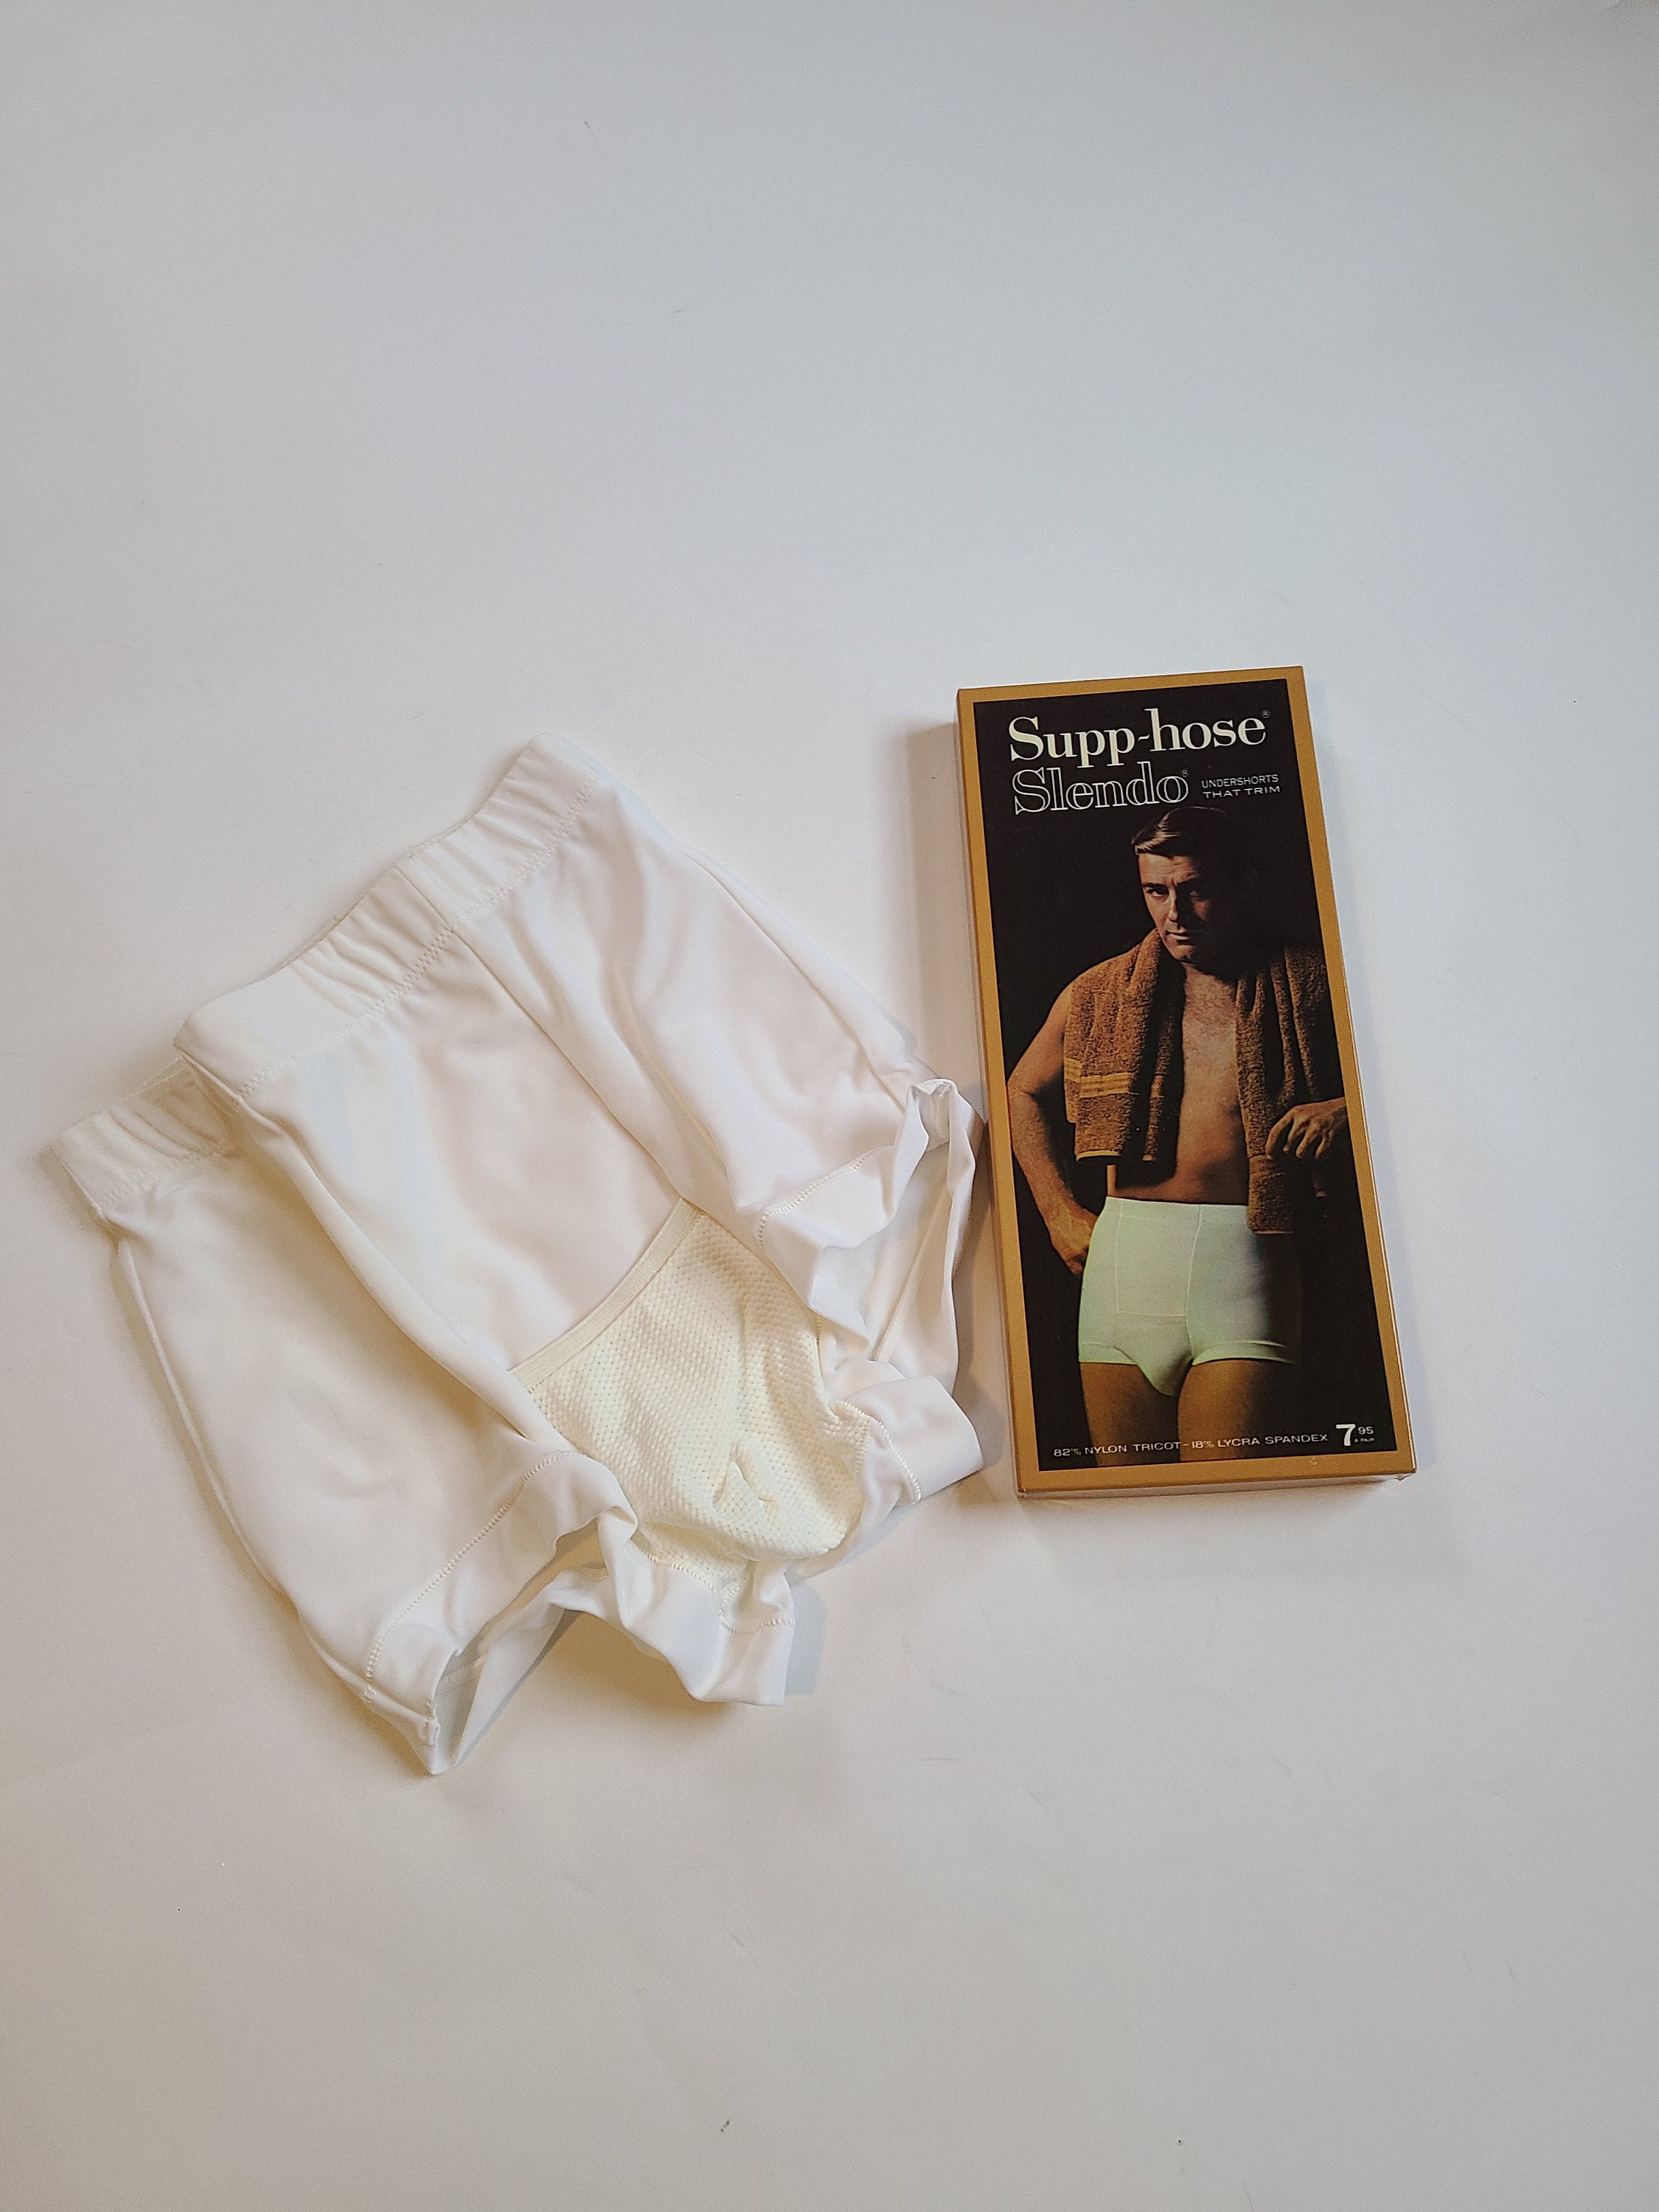 Tommy Hilfiger Black Briefs, Tighty Whities, Used Underwear, Mens Underwear,  Size Large 